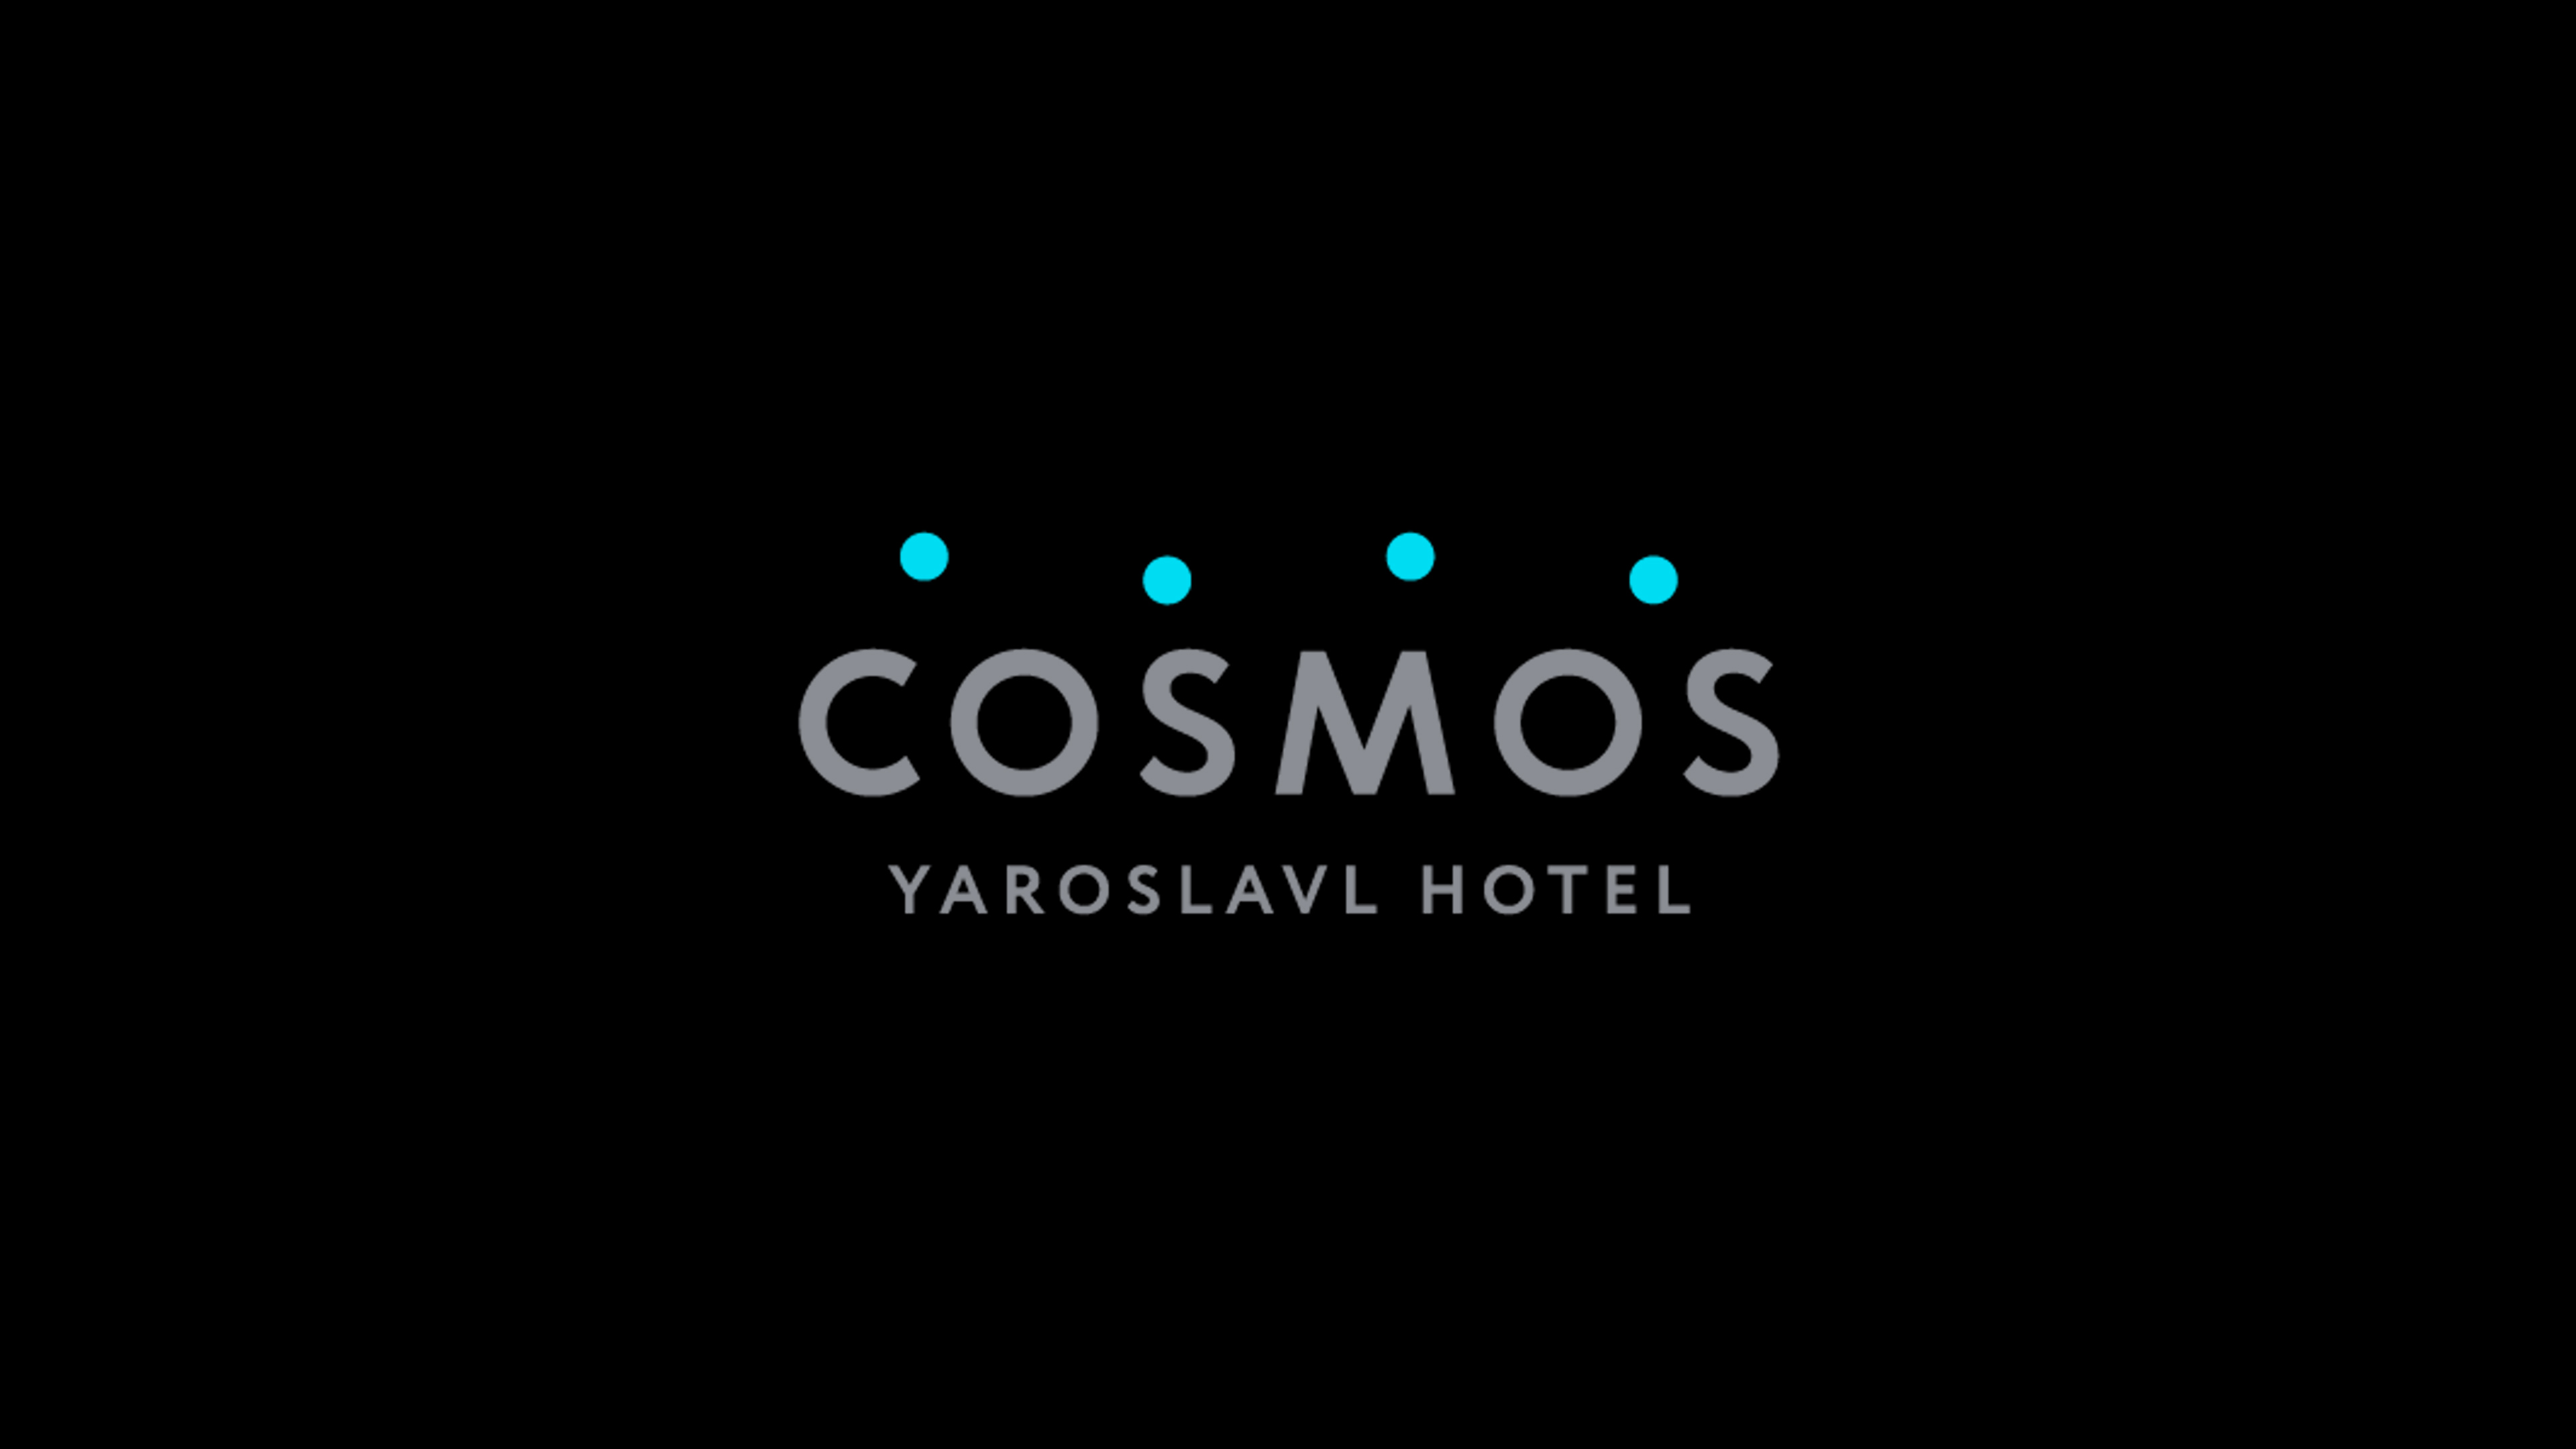 Ярославль. COSMOS Yaroslavl Hotel, с Днем рождения!🎁🎁🎁  COSMOS Yaroslavl Hotel, Happy Birthday!